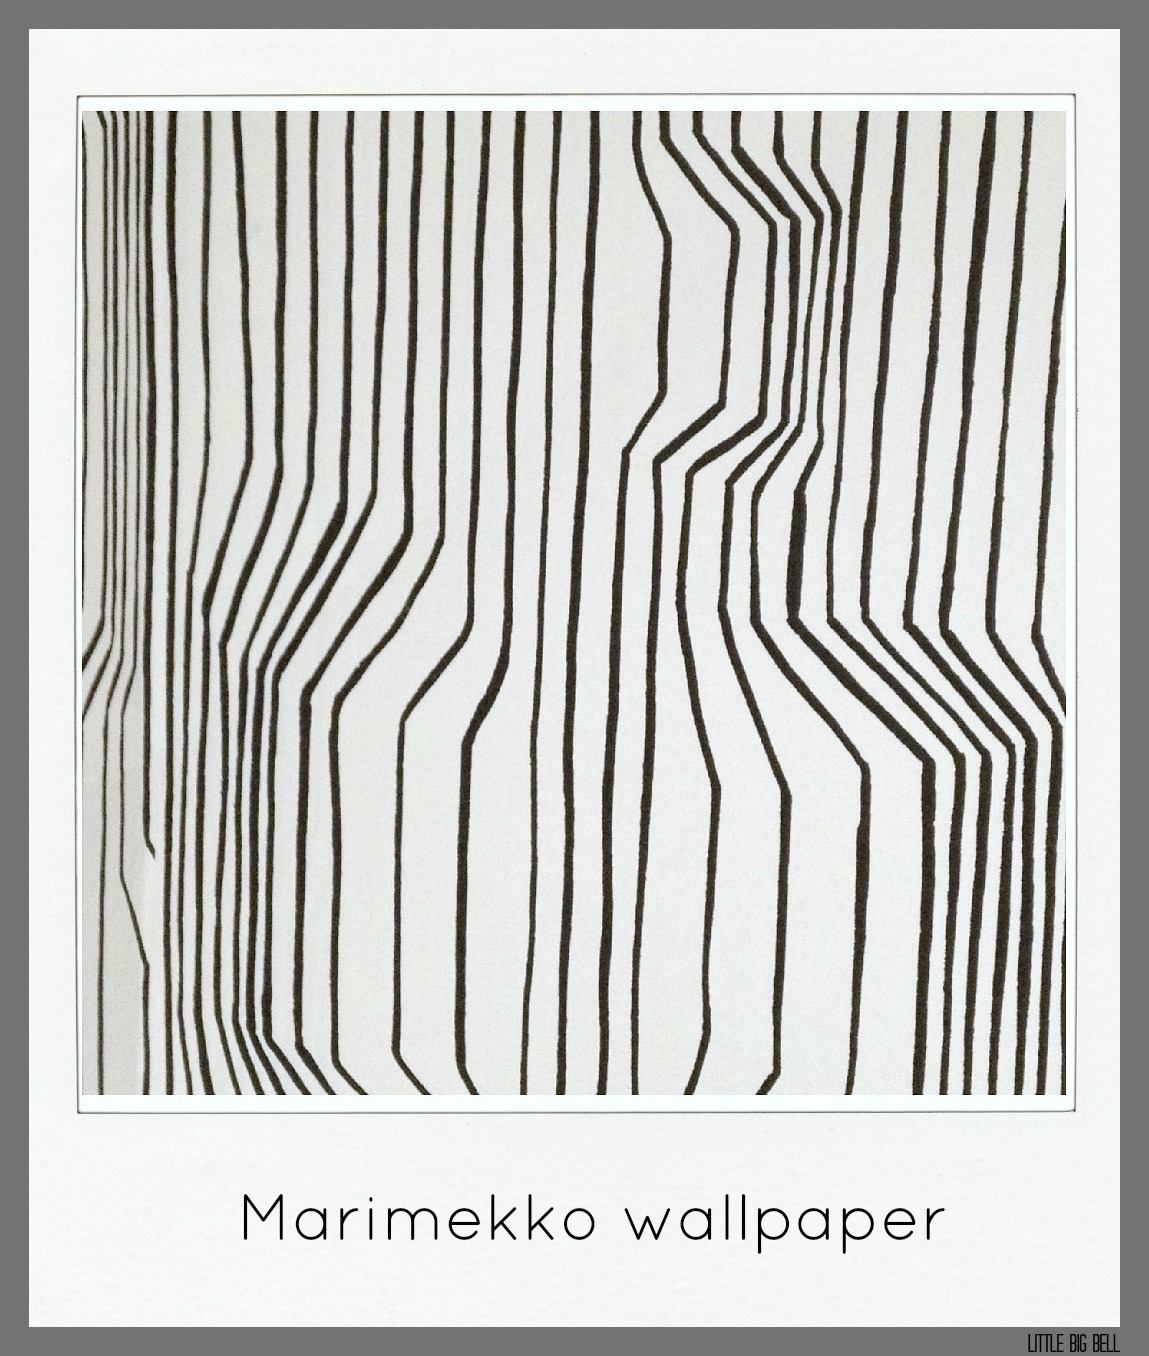 Marimekko wallpaper